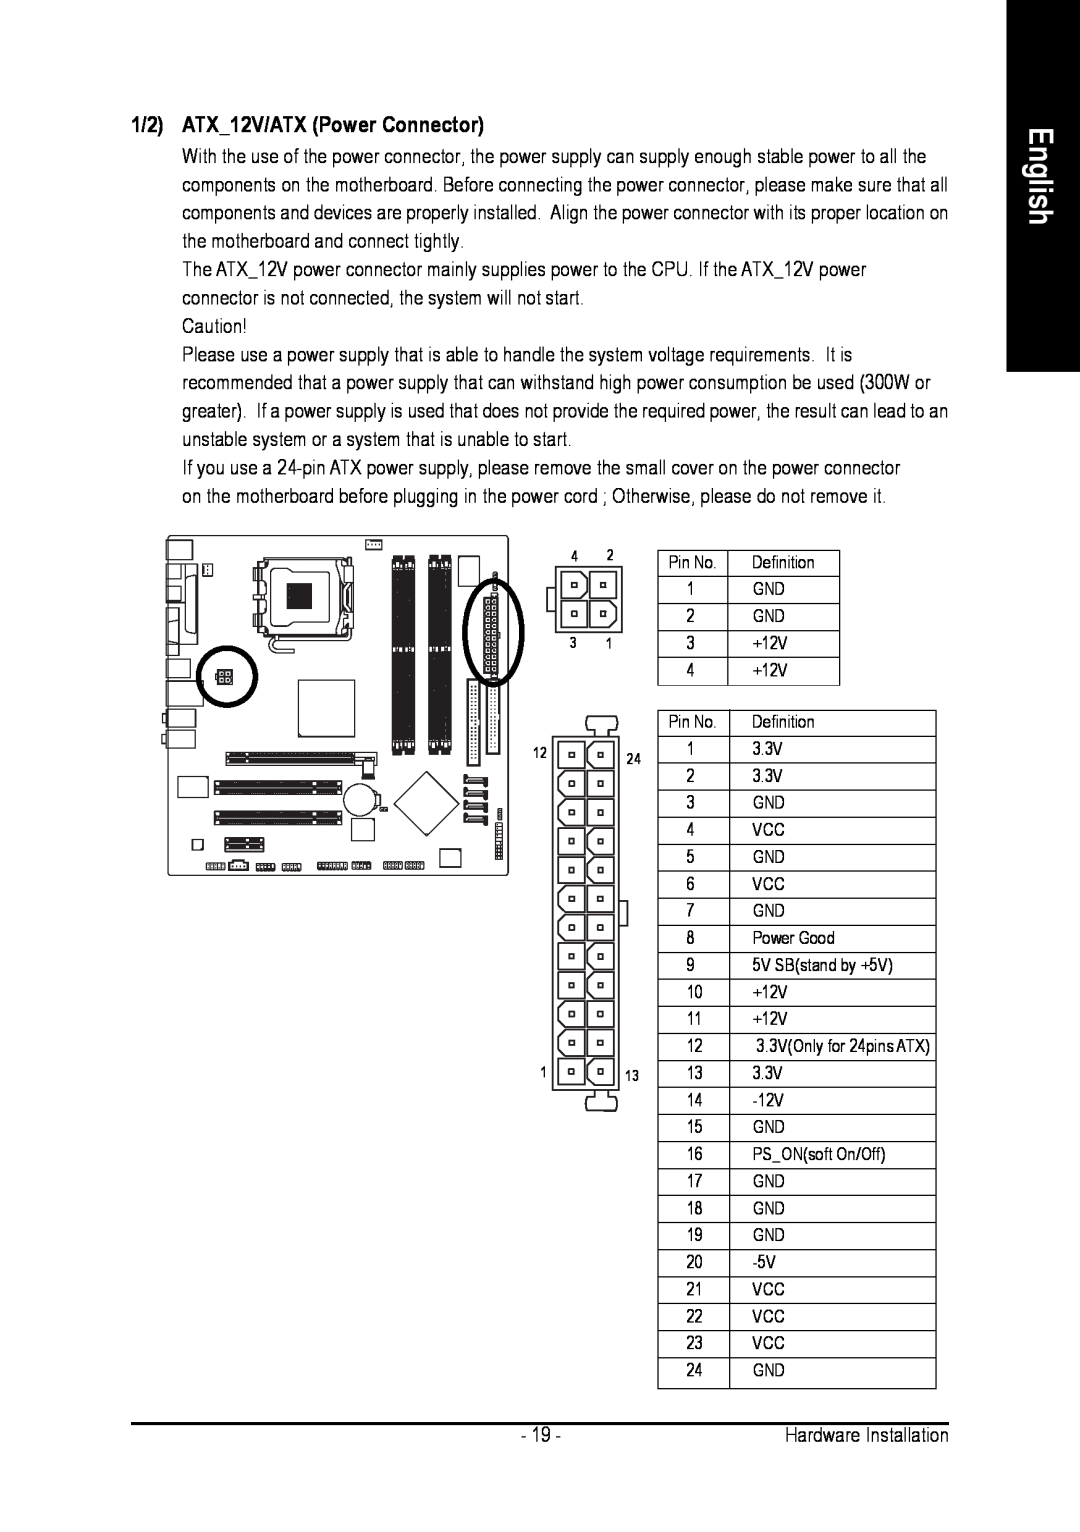 Intel GA-8I915G-MFD user manual 1/2 ATX_12V/ATX Power Connector, English 